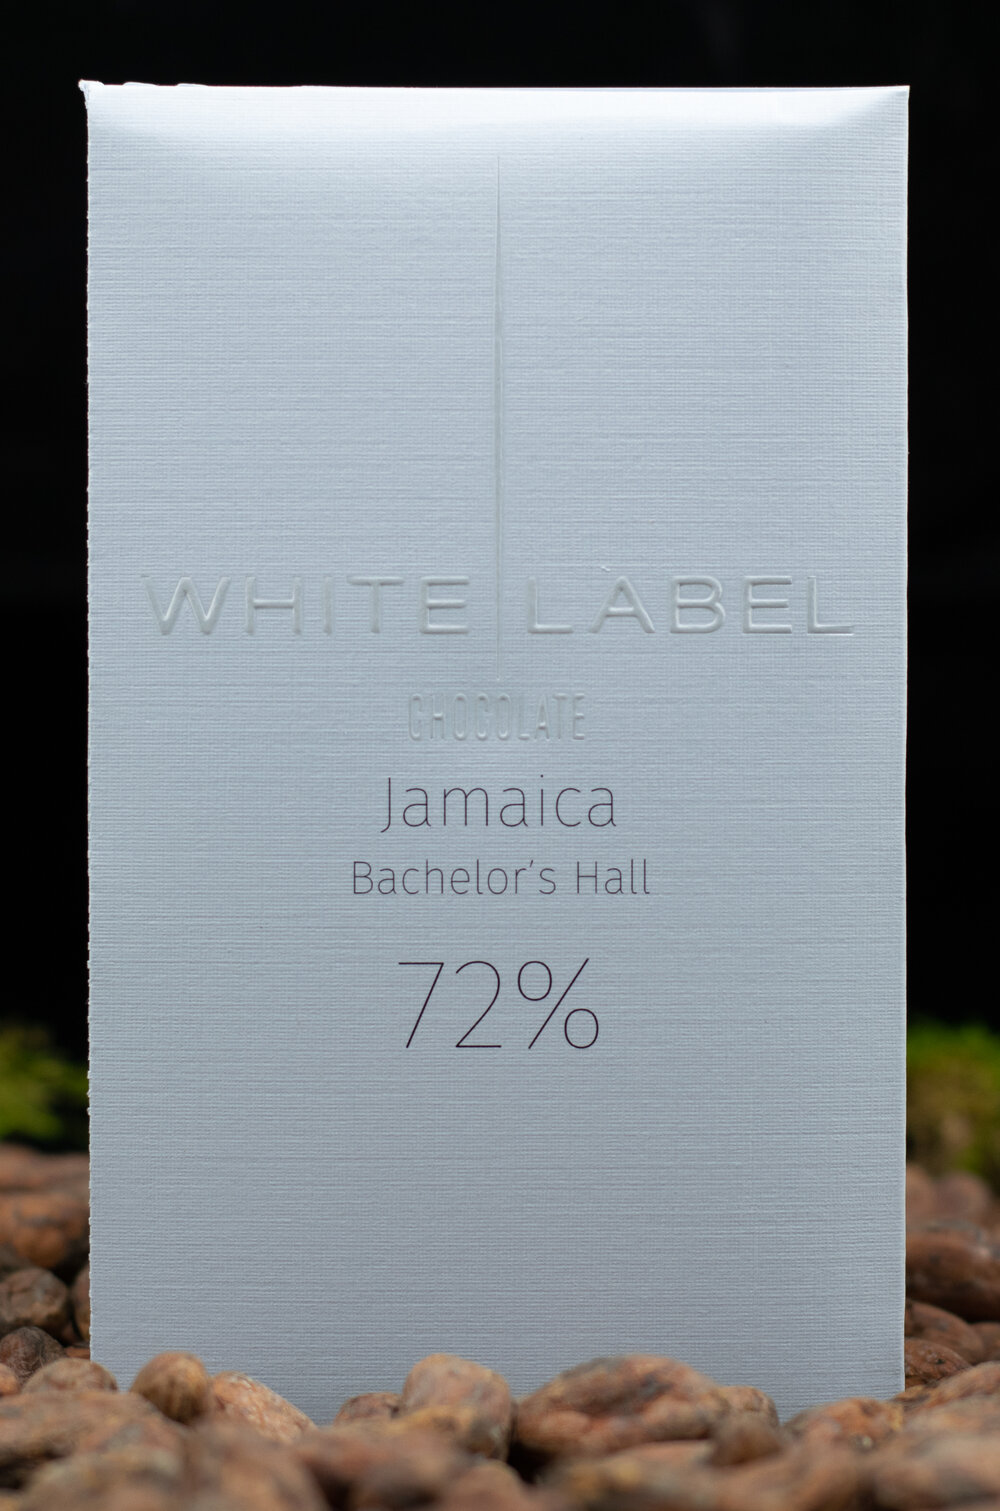 WHITE LABEL Chocolate | Dunkle Schokolade »Jamaica - Bachelor's Hall« 72%